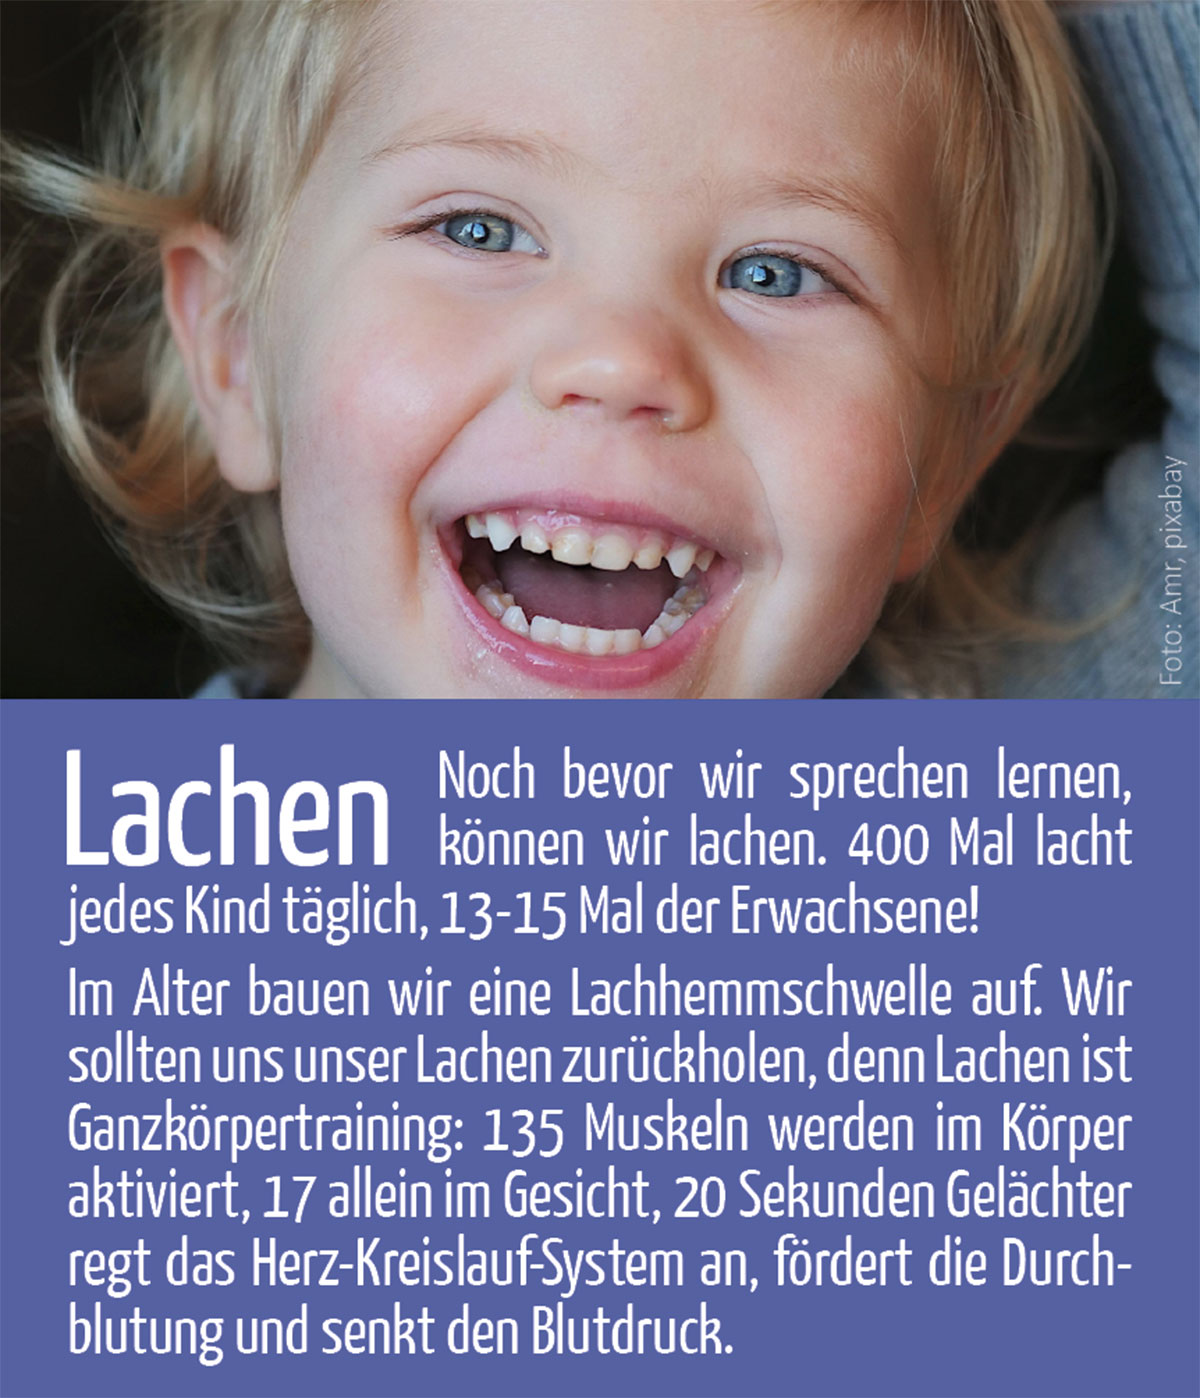 Lachen (Foto: AbouYassin, pixabay)